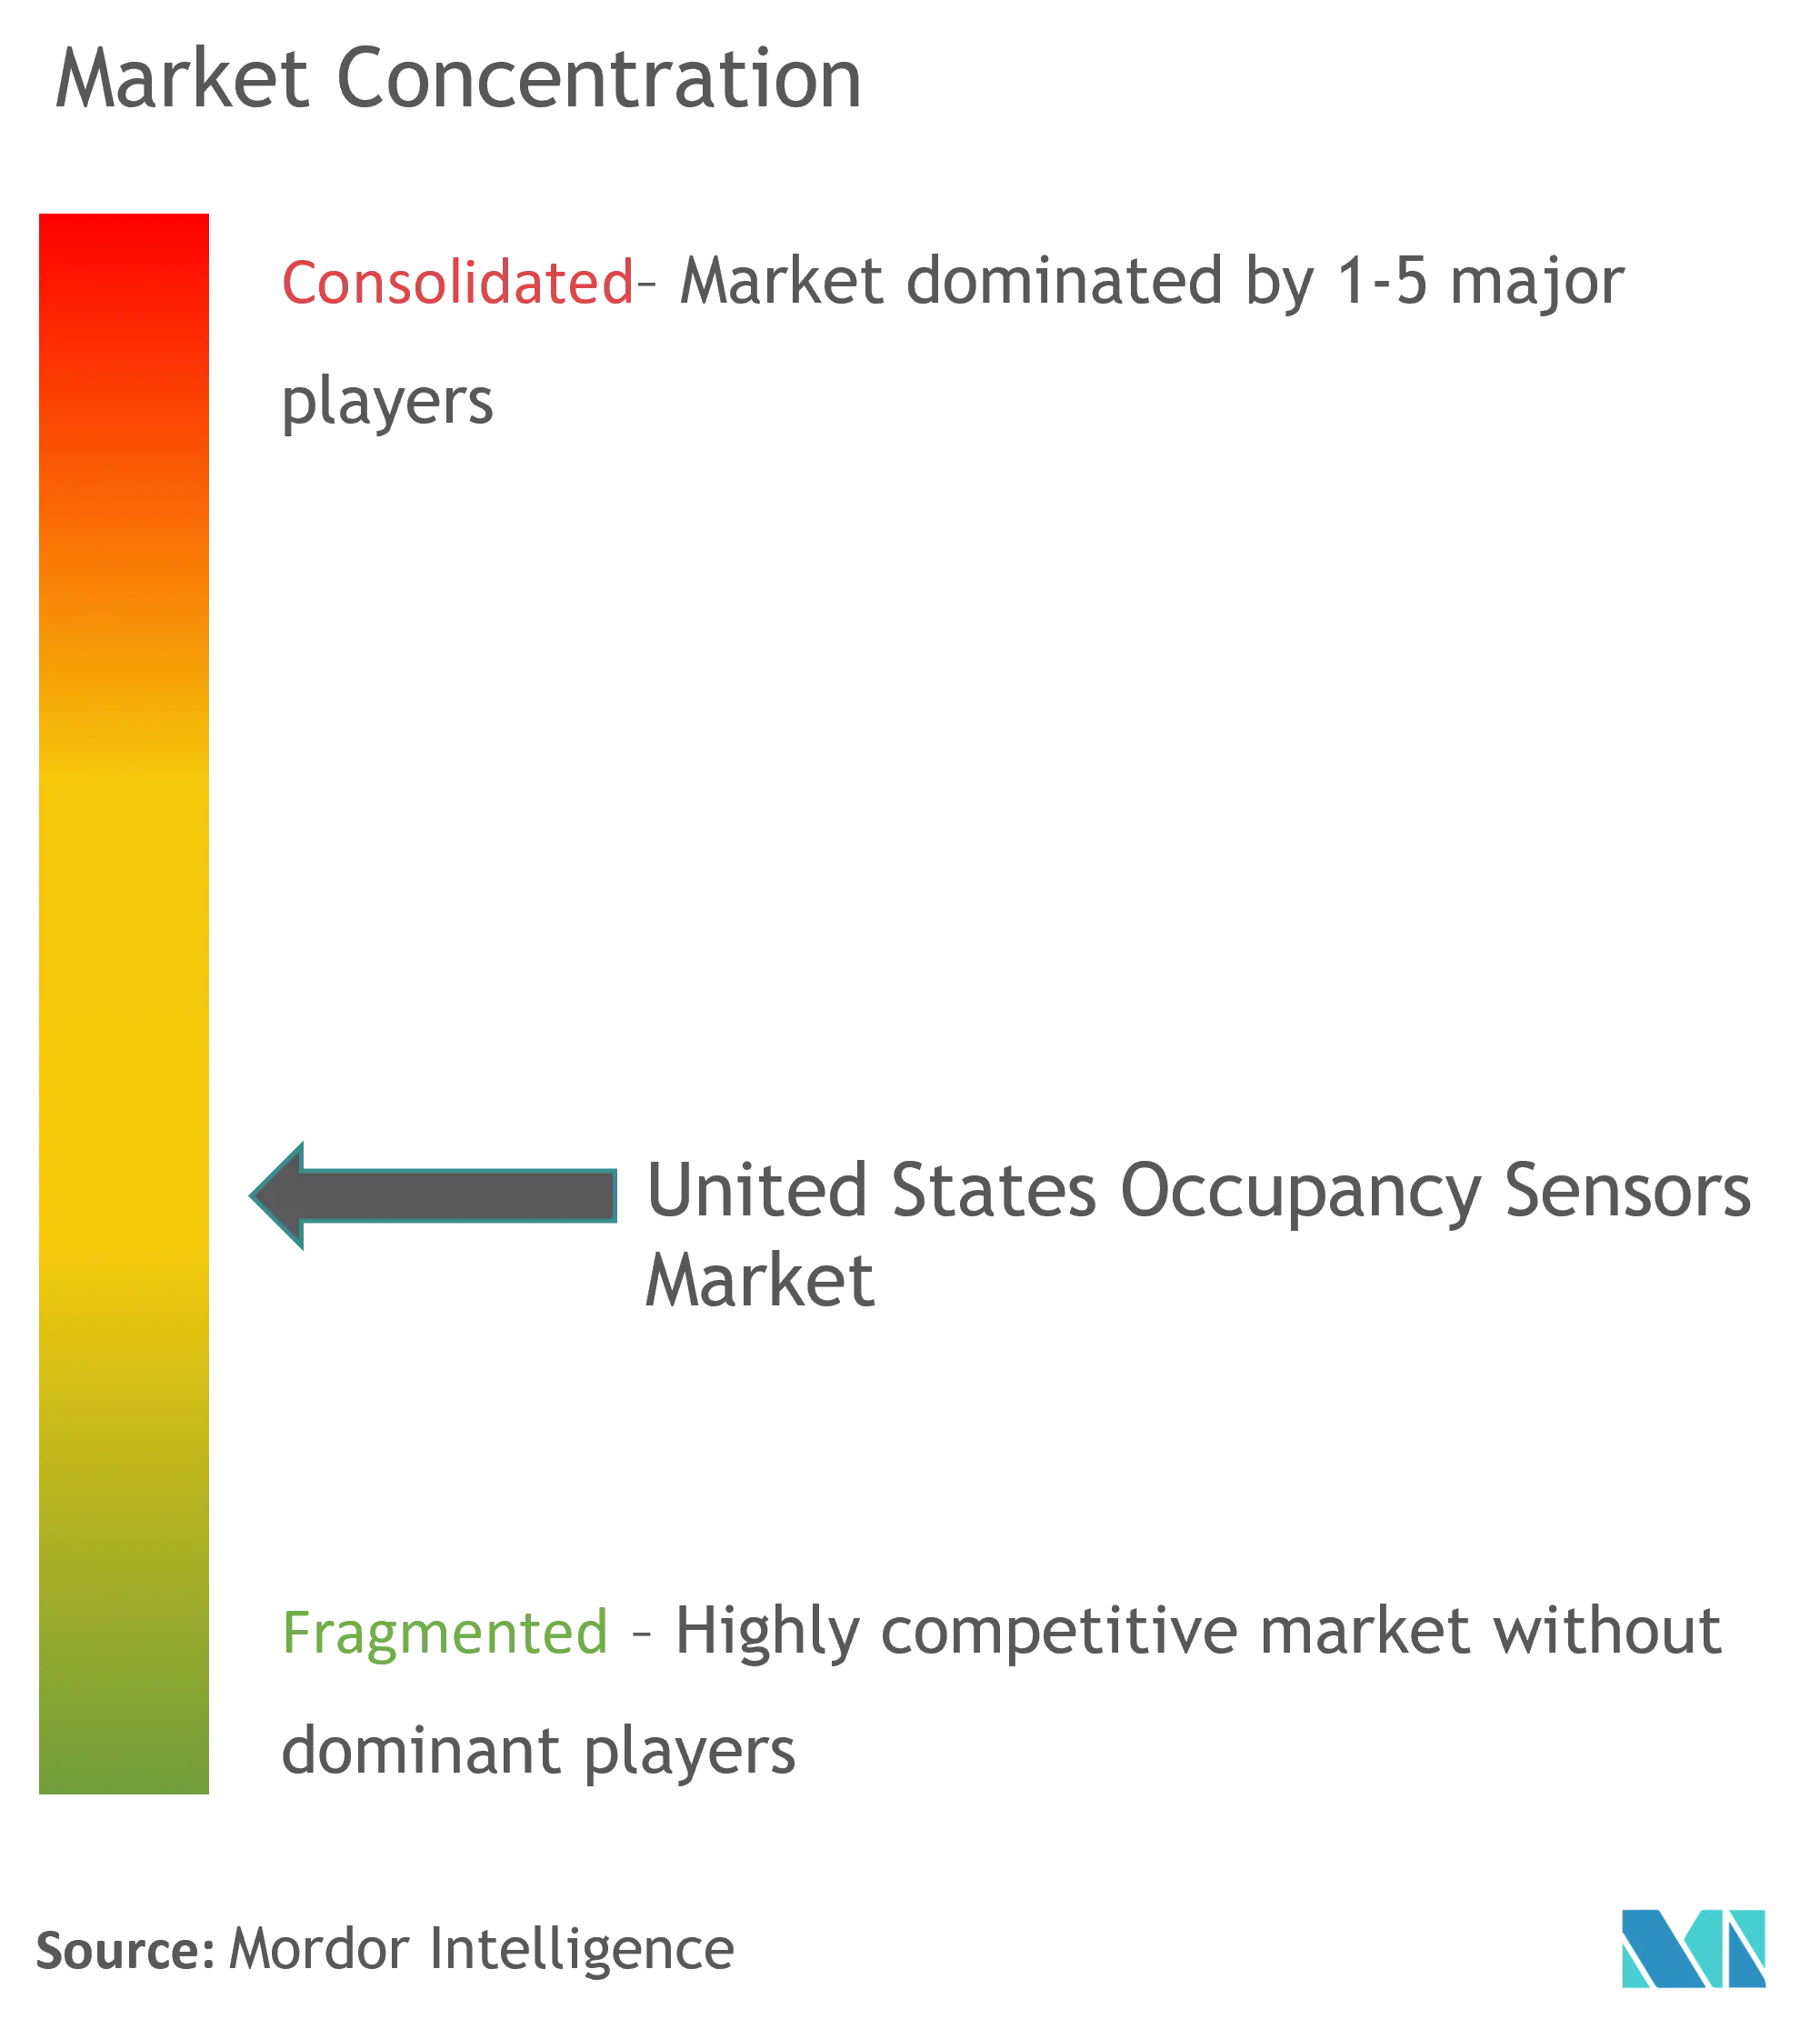 United States Occupancy Sensors Market